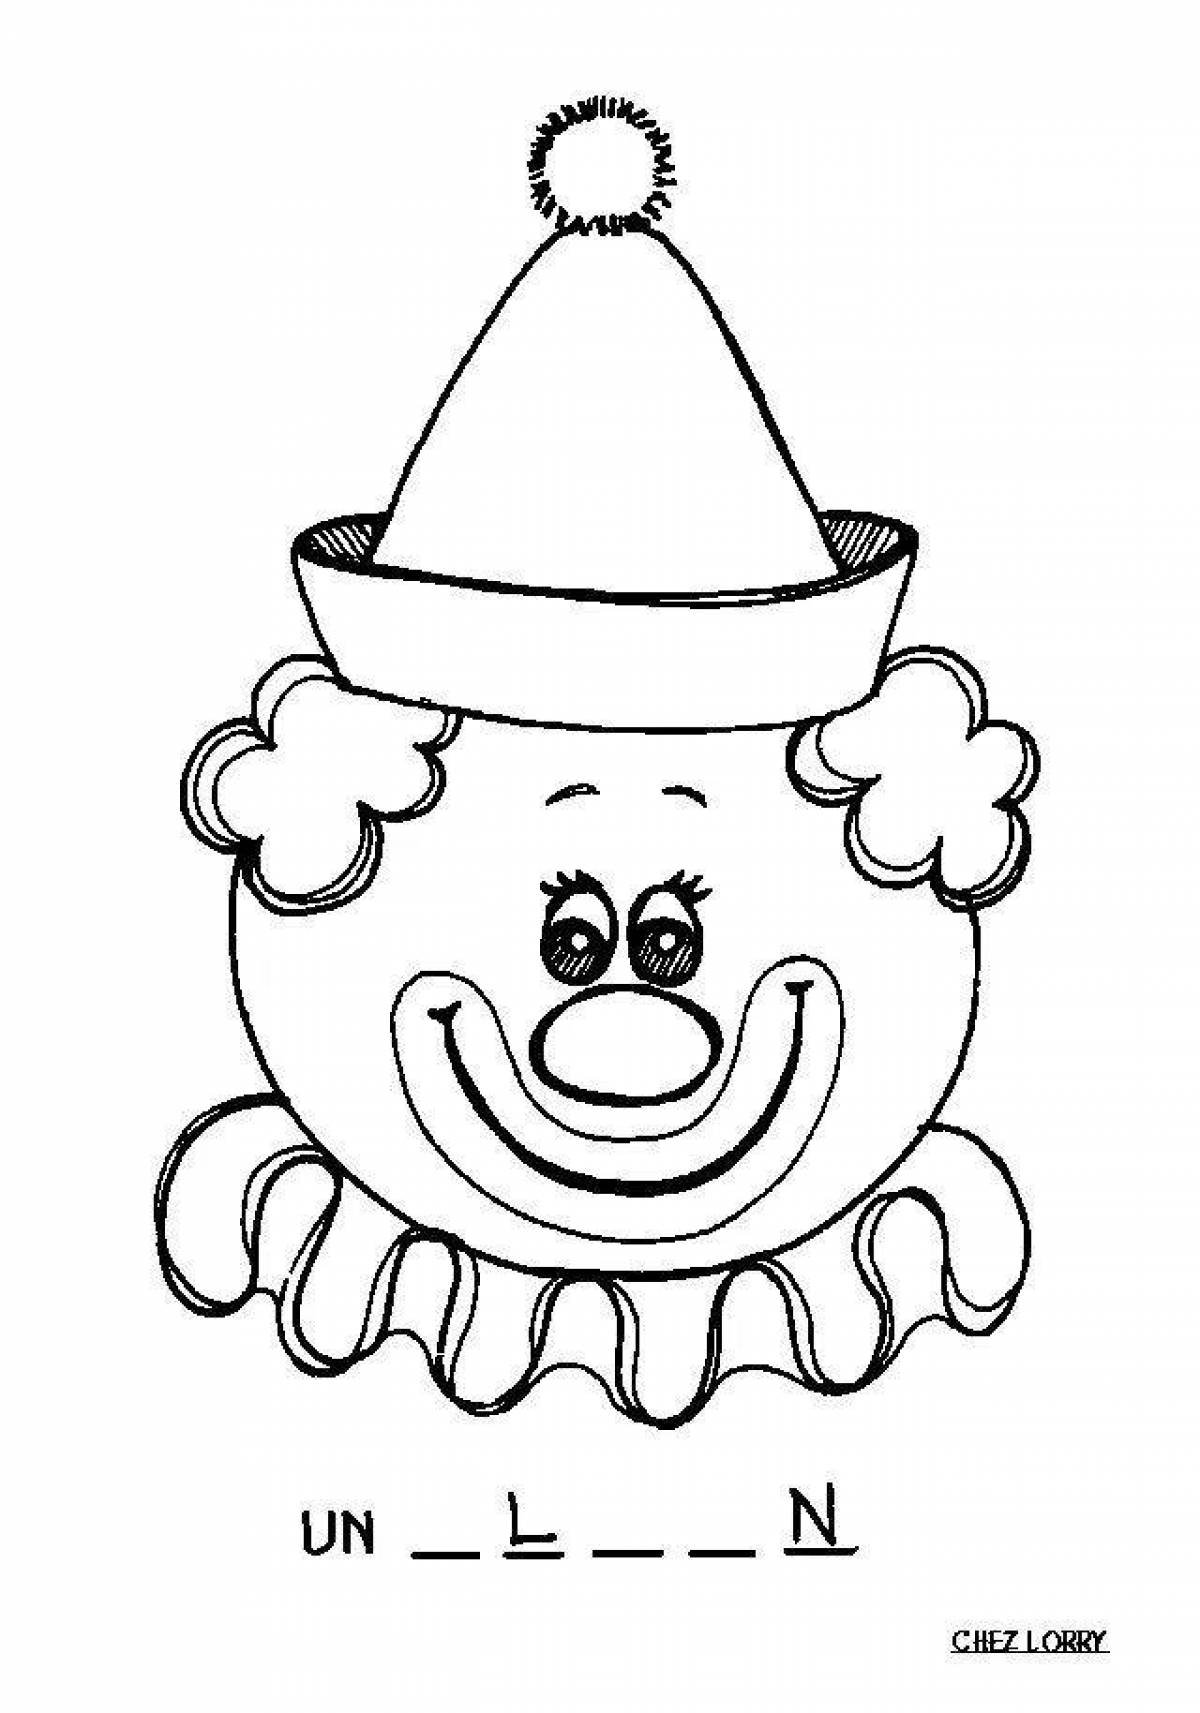 Шаблон маски клоуна распечатать. Клоун раскраска. Клоун раскраска для детей. Лицо клоуна раскраски для детей. Аппликация "клоун".